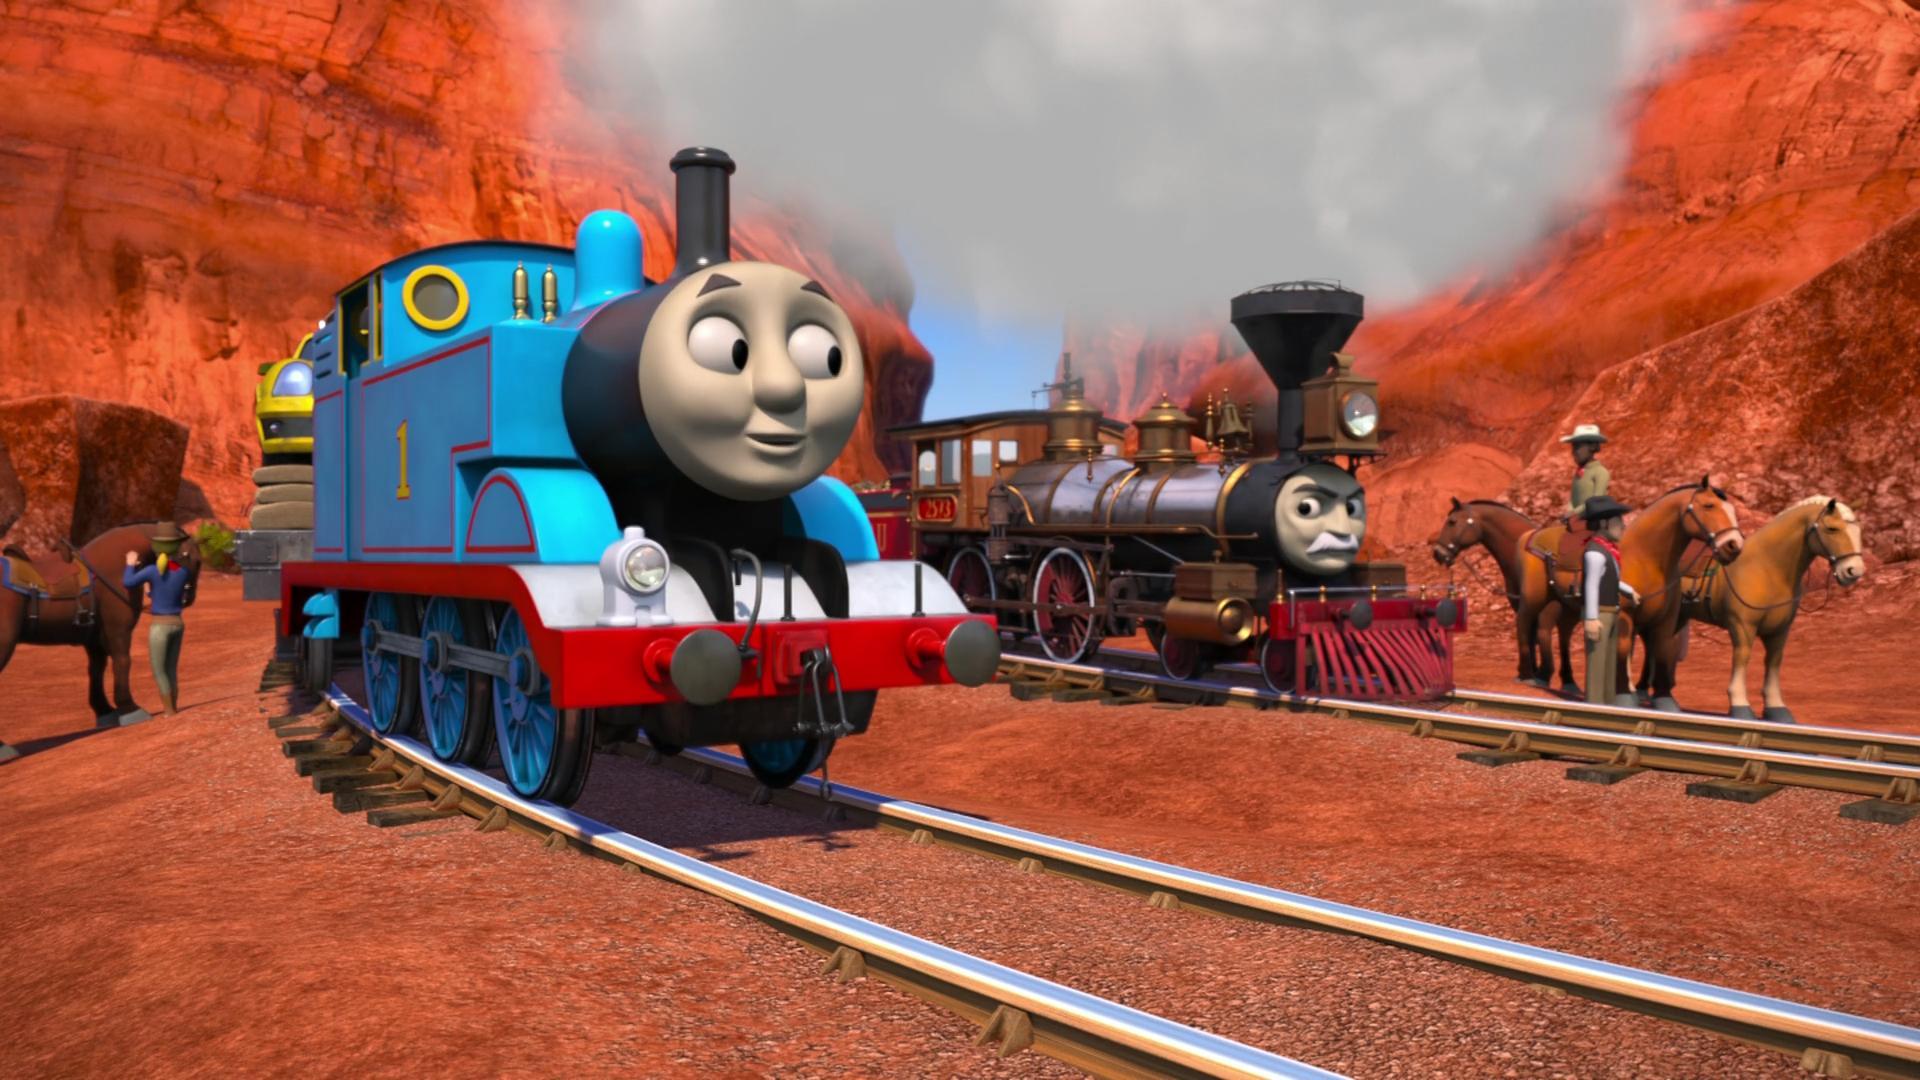 Thomas & Friends: Big World! Big Adventures! The Movie 2018